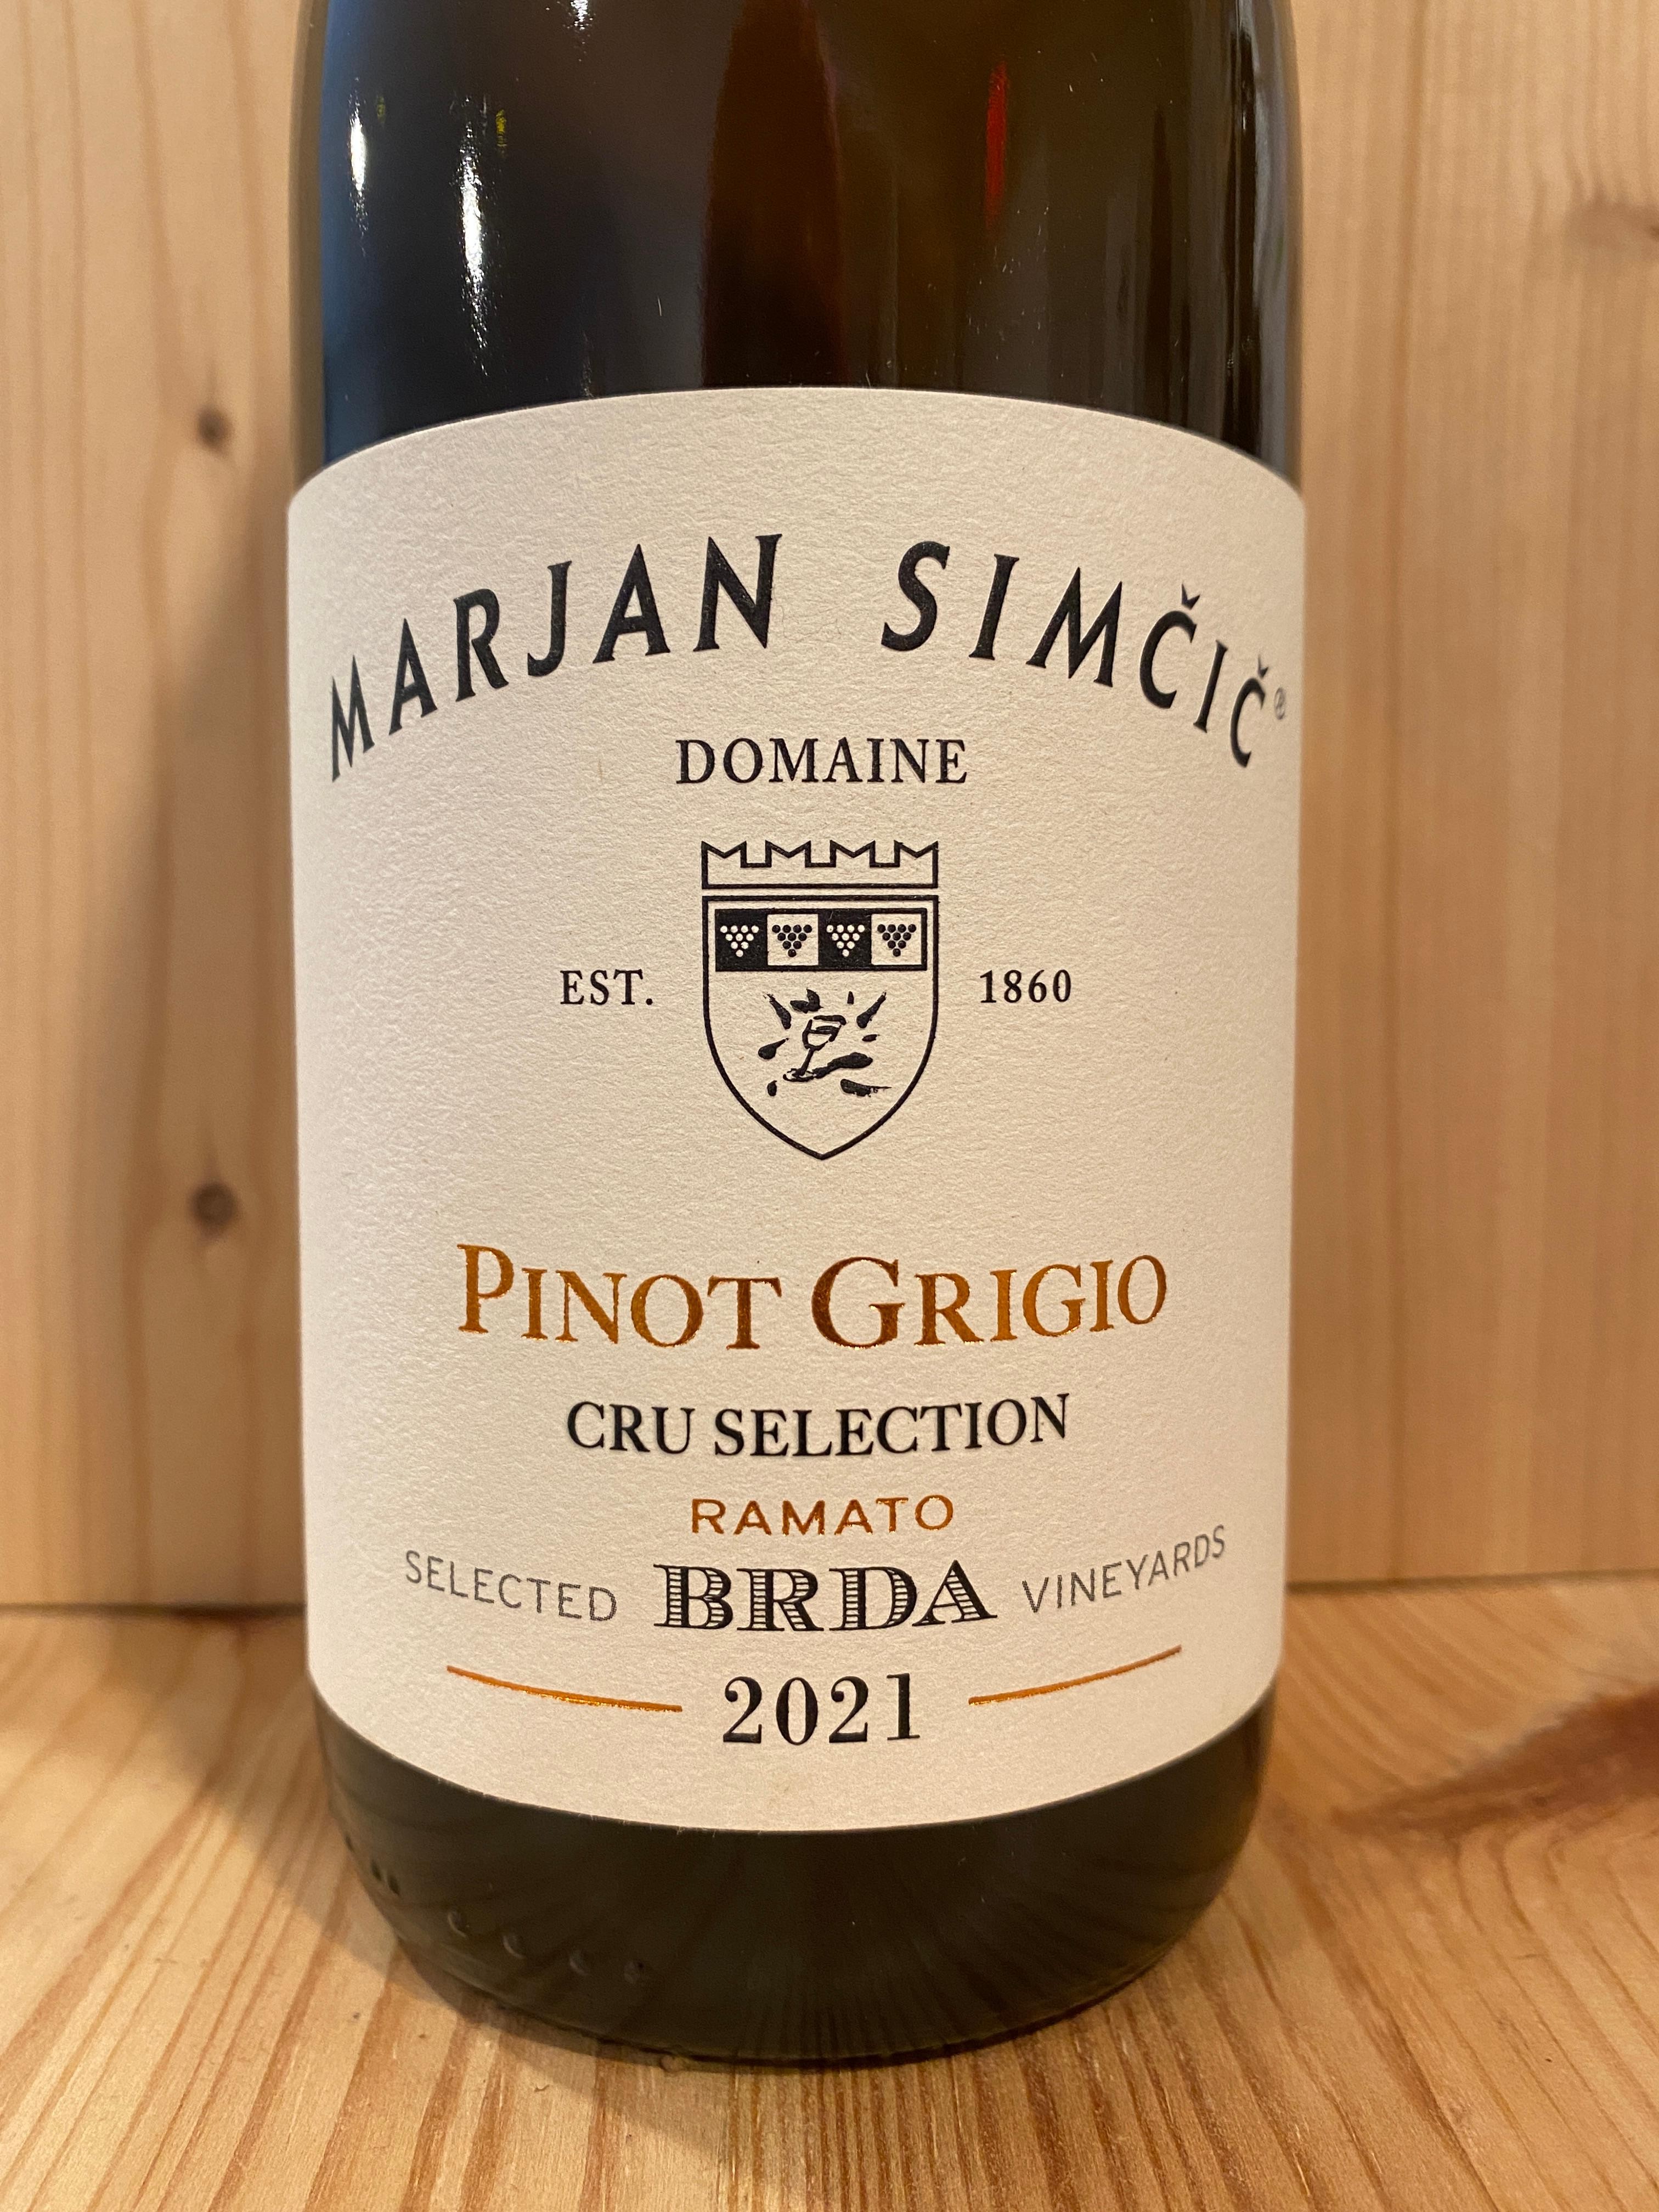 Marjan Simčič Cru Selection Pinot Grigio Ramato 2021: Brda, Slovenia